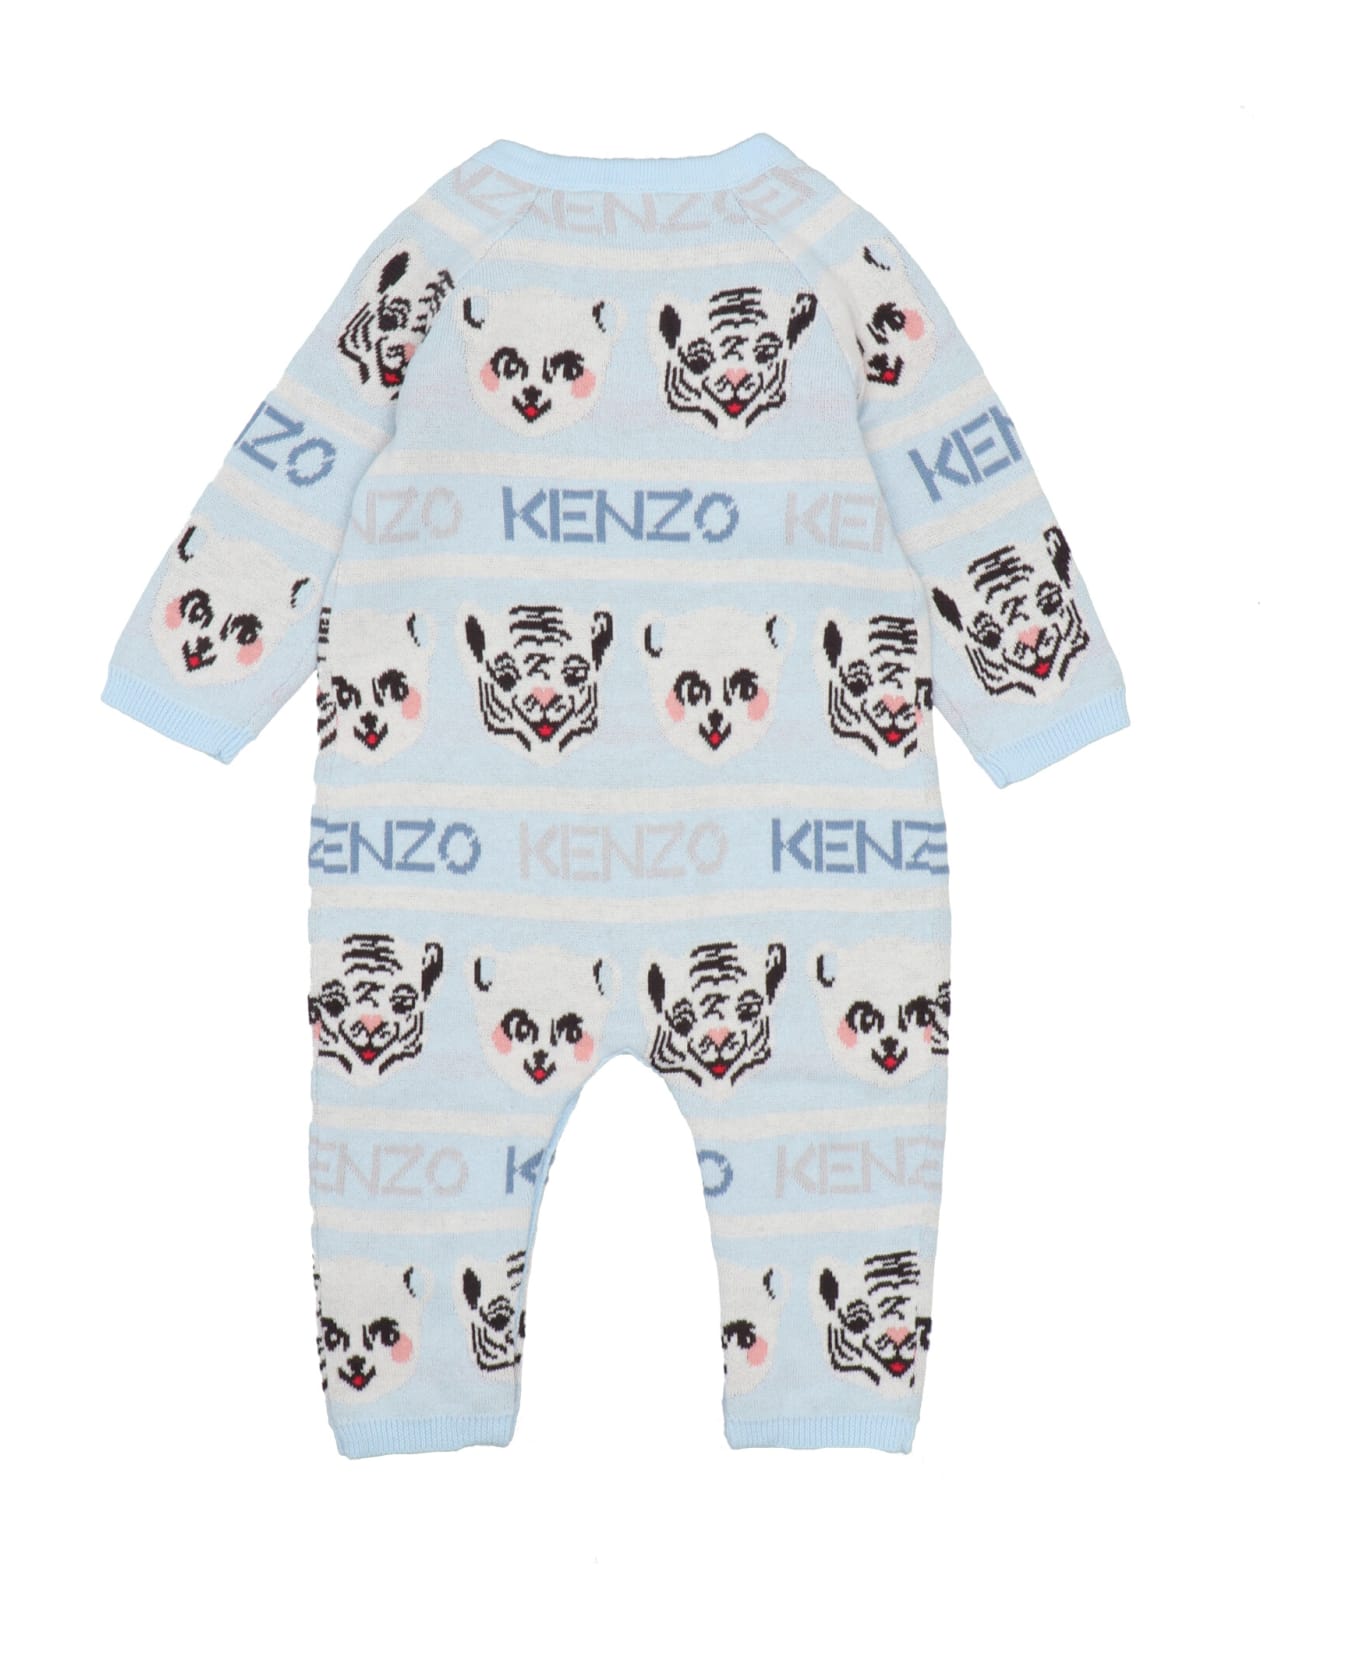 Kenzo Kids 'panda' Beanie Set - Light Blue